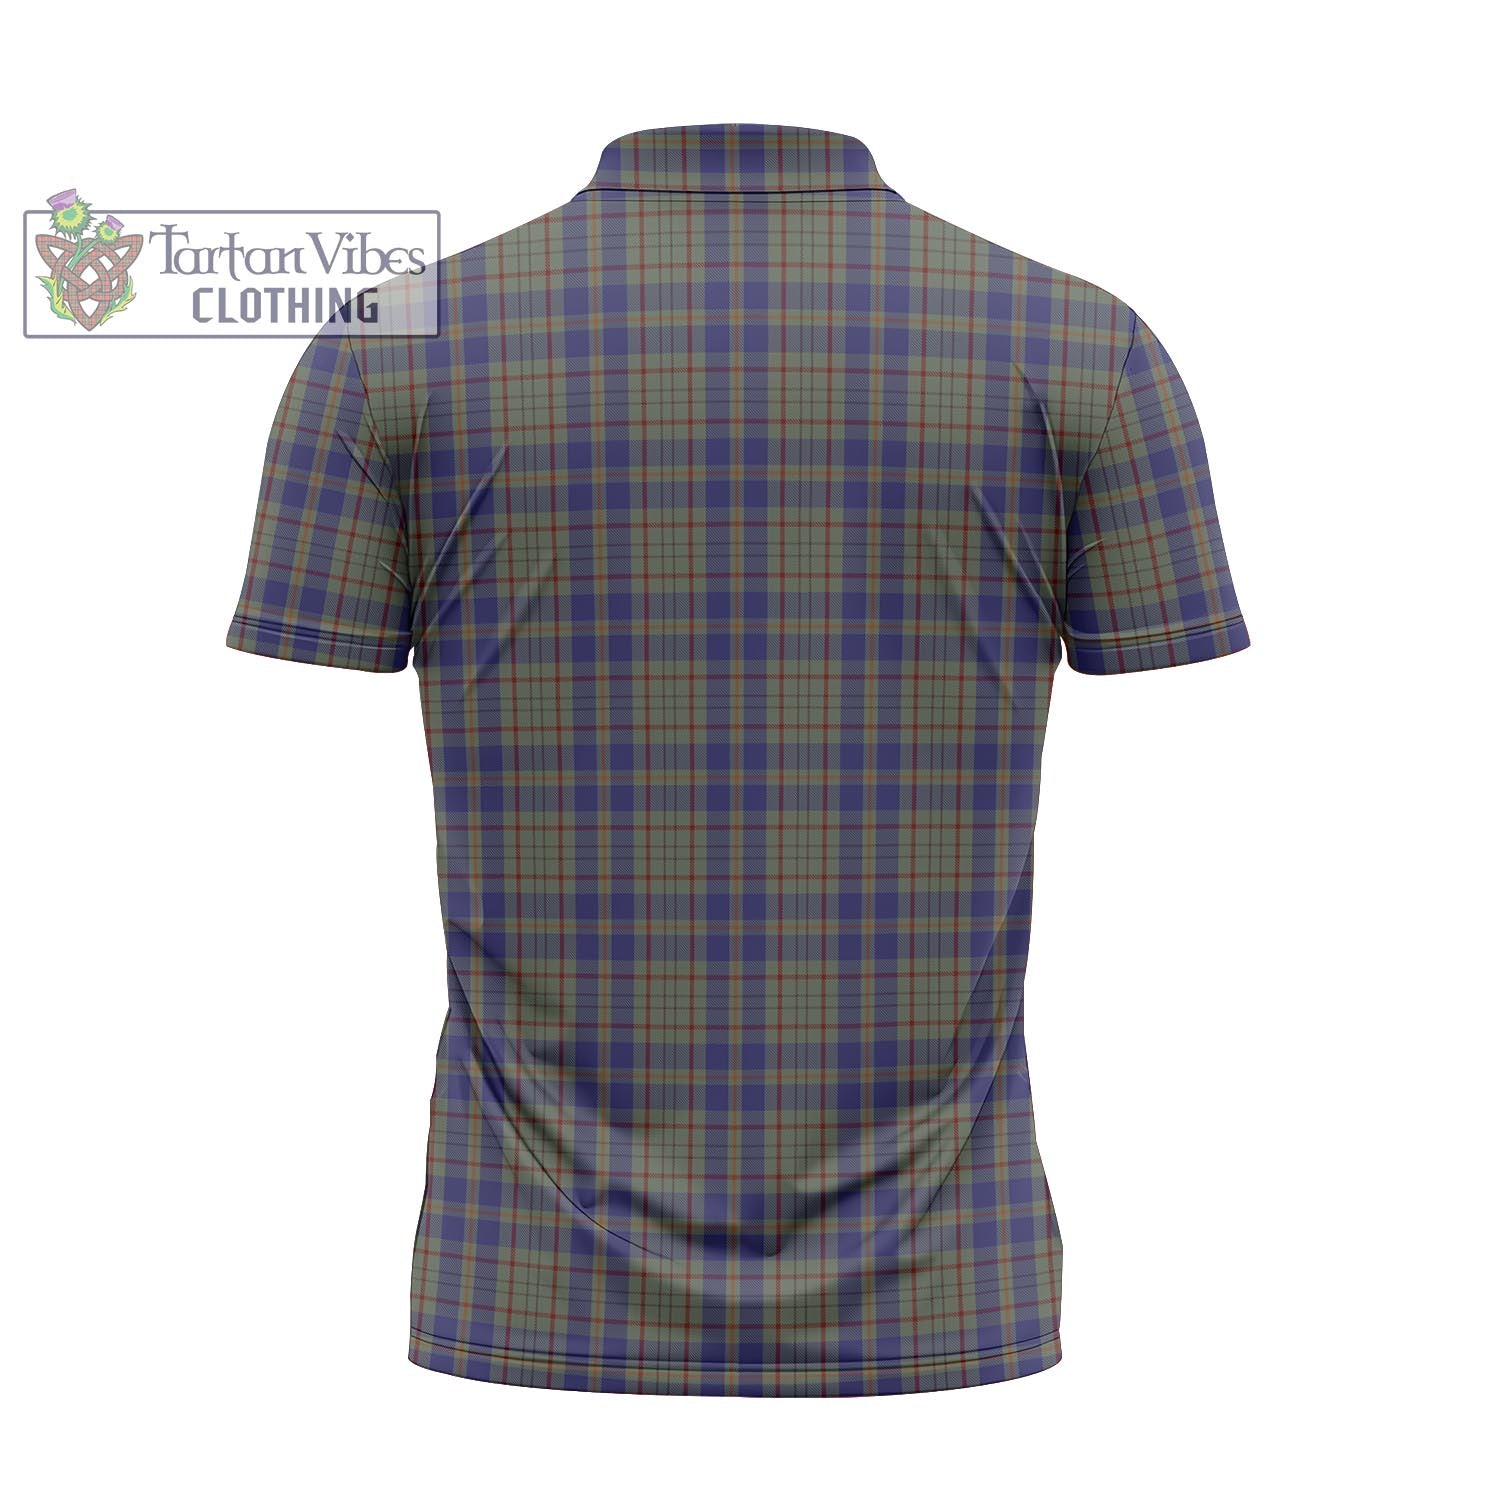 Tartan Vibes Clothing Kildare County Ireland Tartan Zipper Polo Shirt